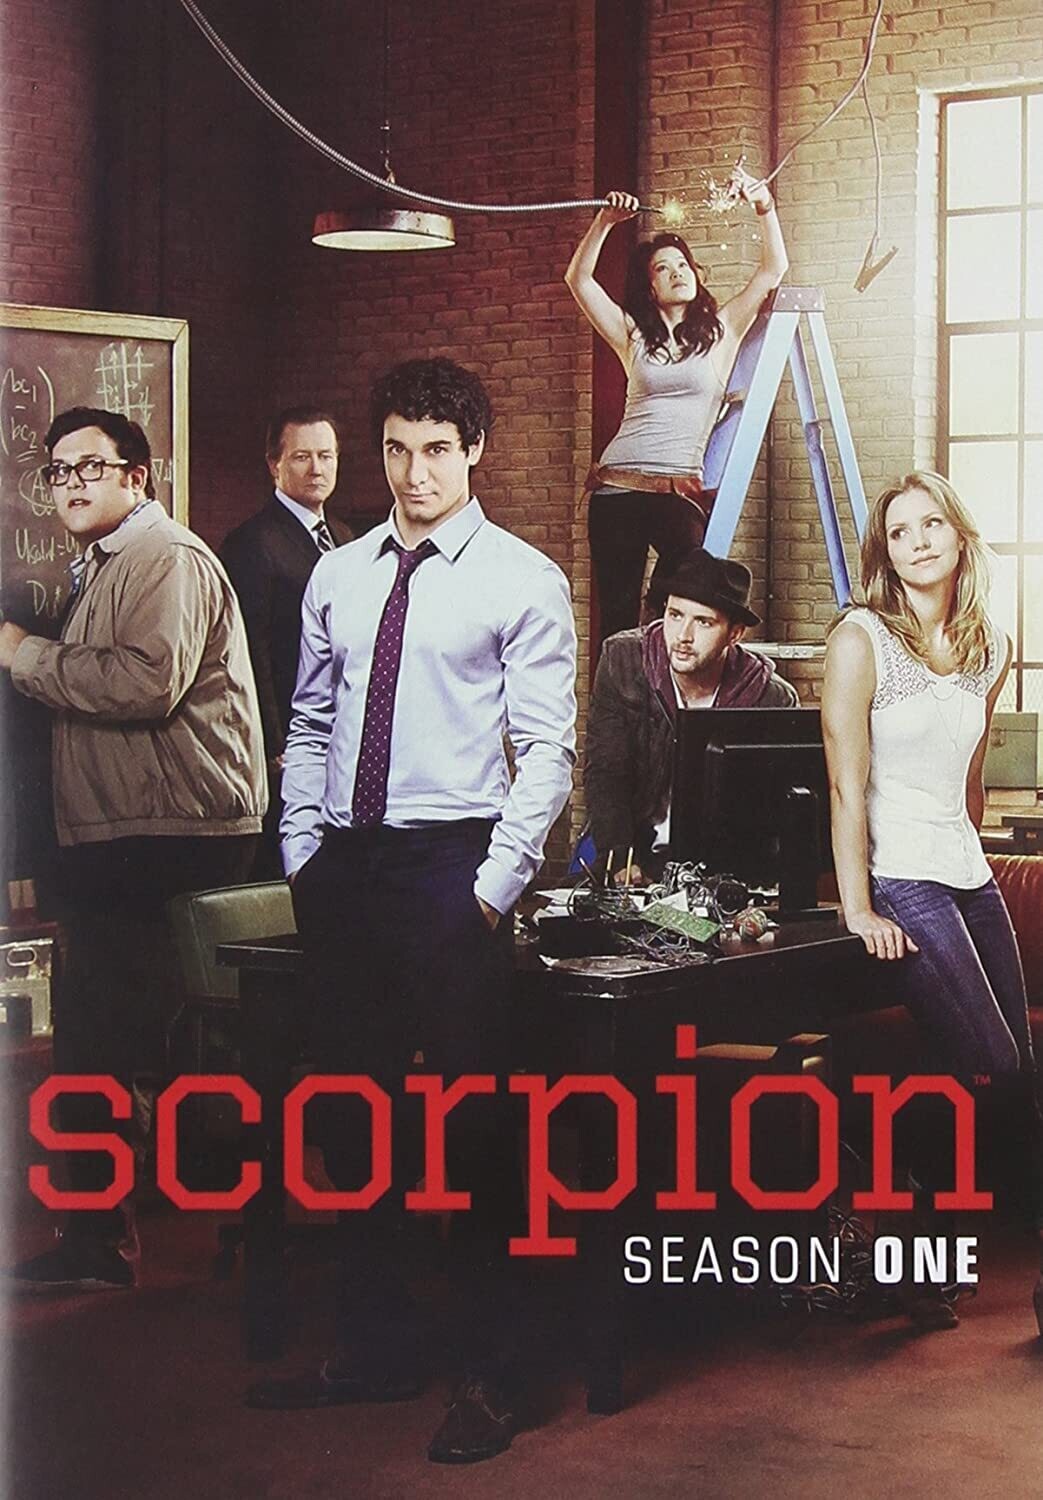 Scorpion Season One (7 day Dvd rental)